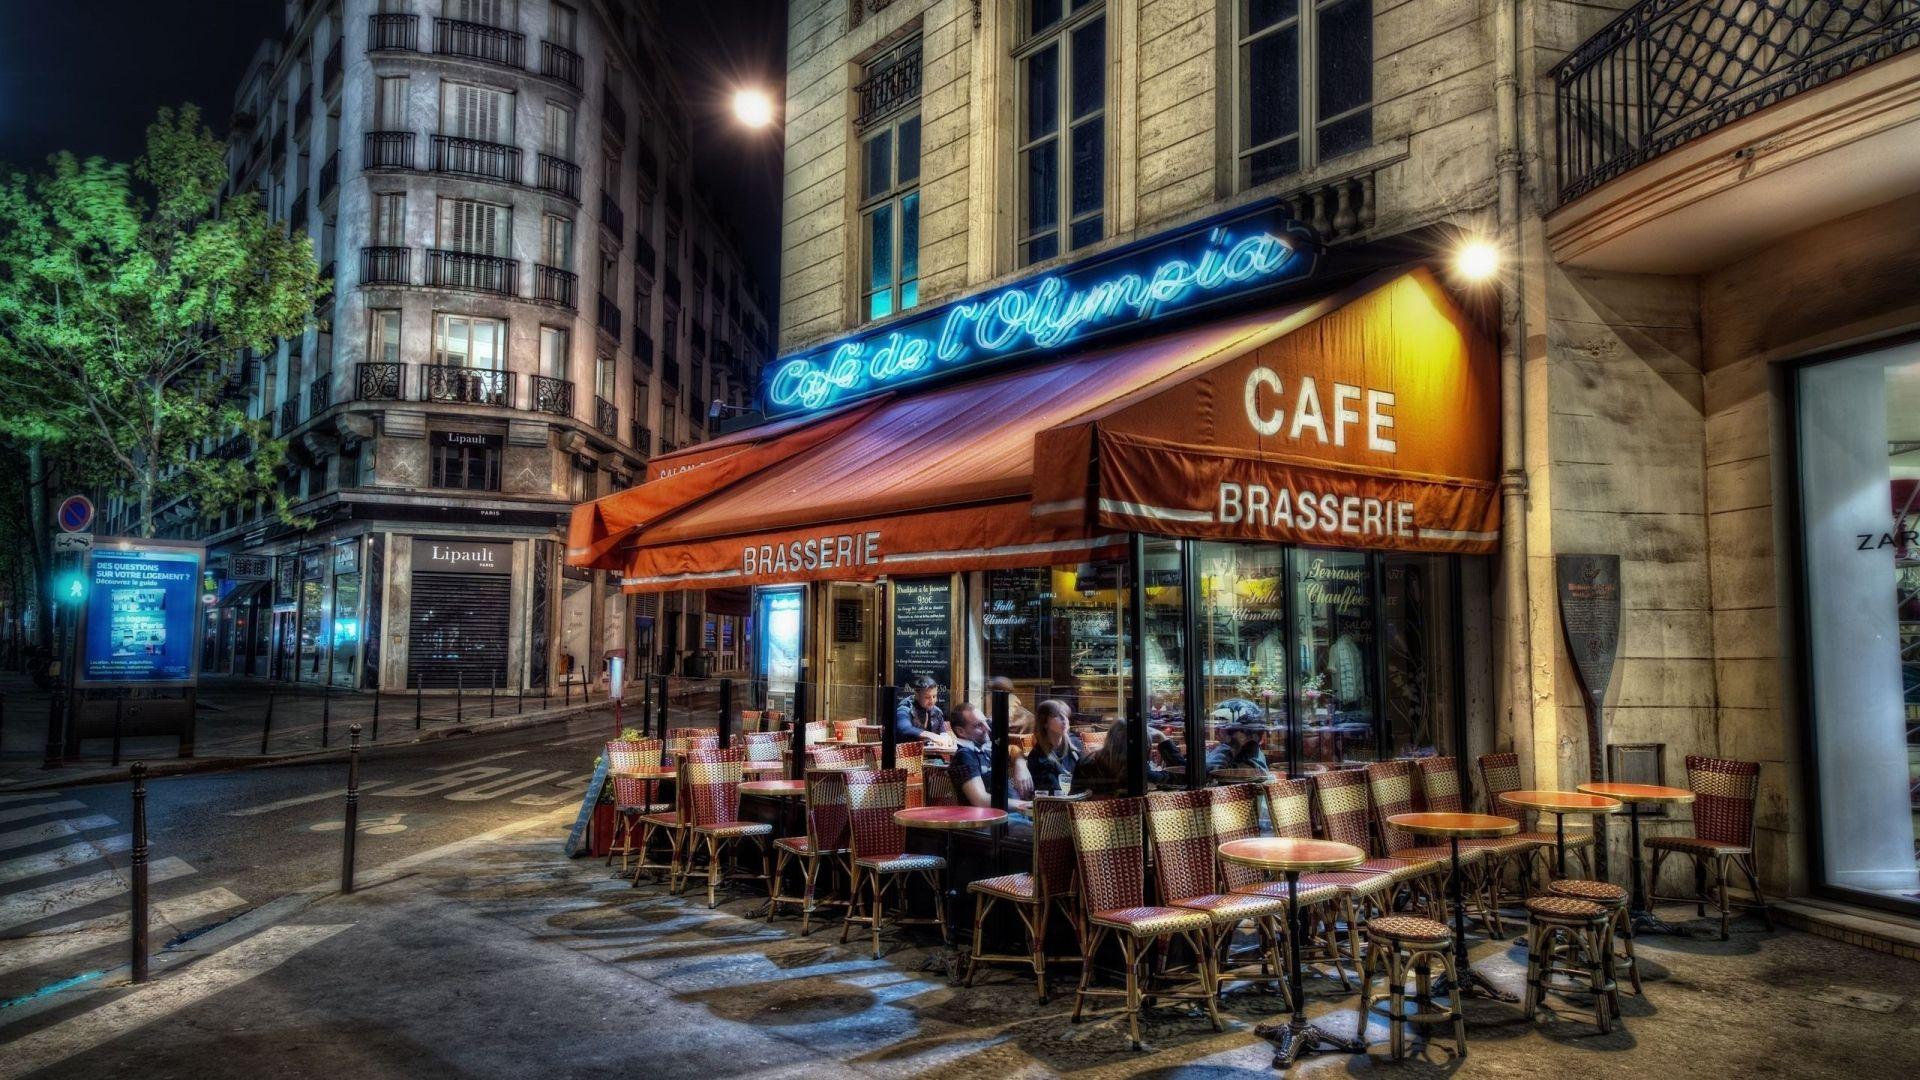 Paris Street Photos Download The BEST Free Paris Street Stock Photos  HD  Images